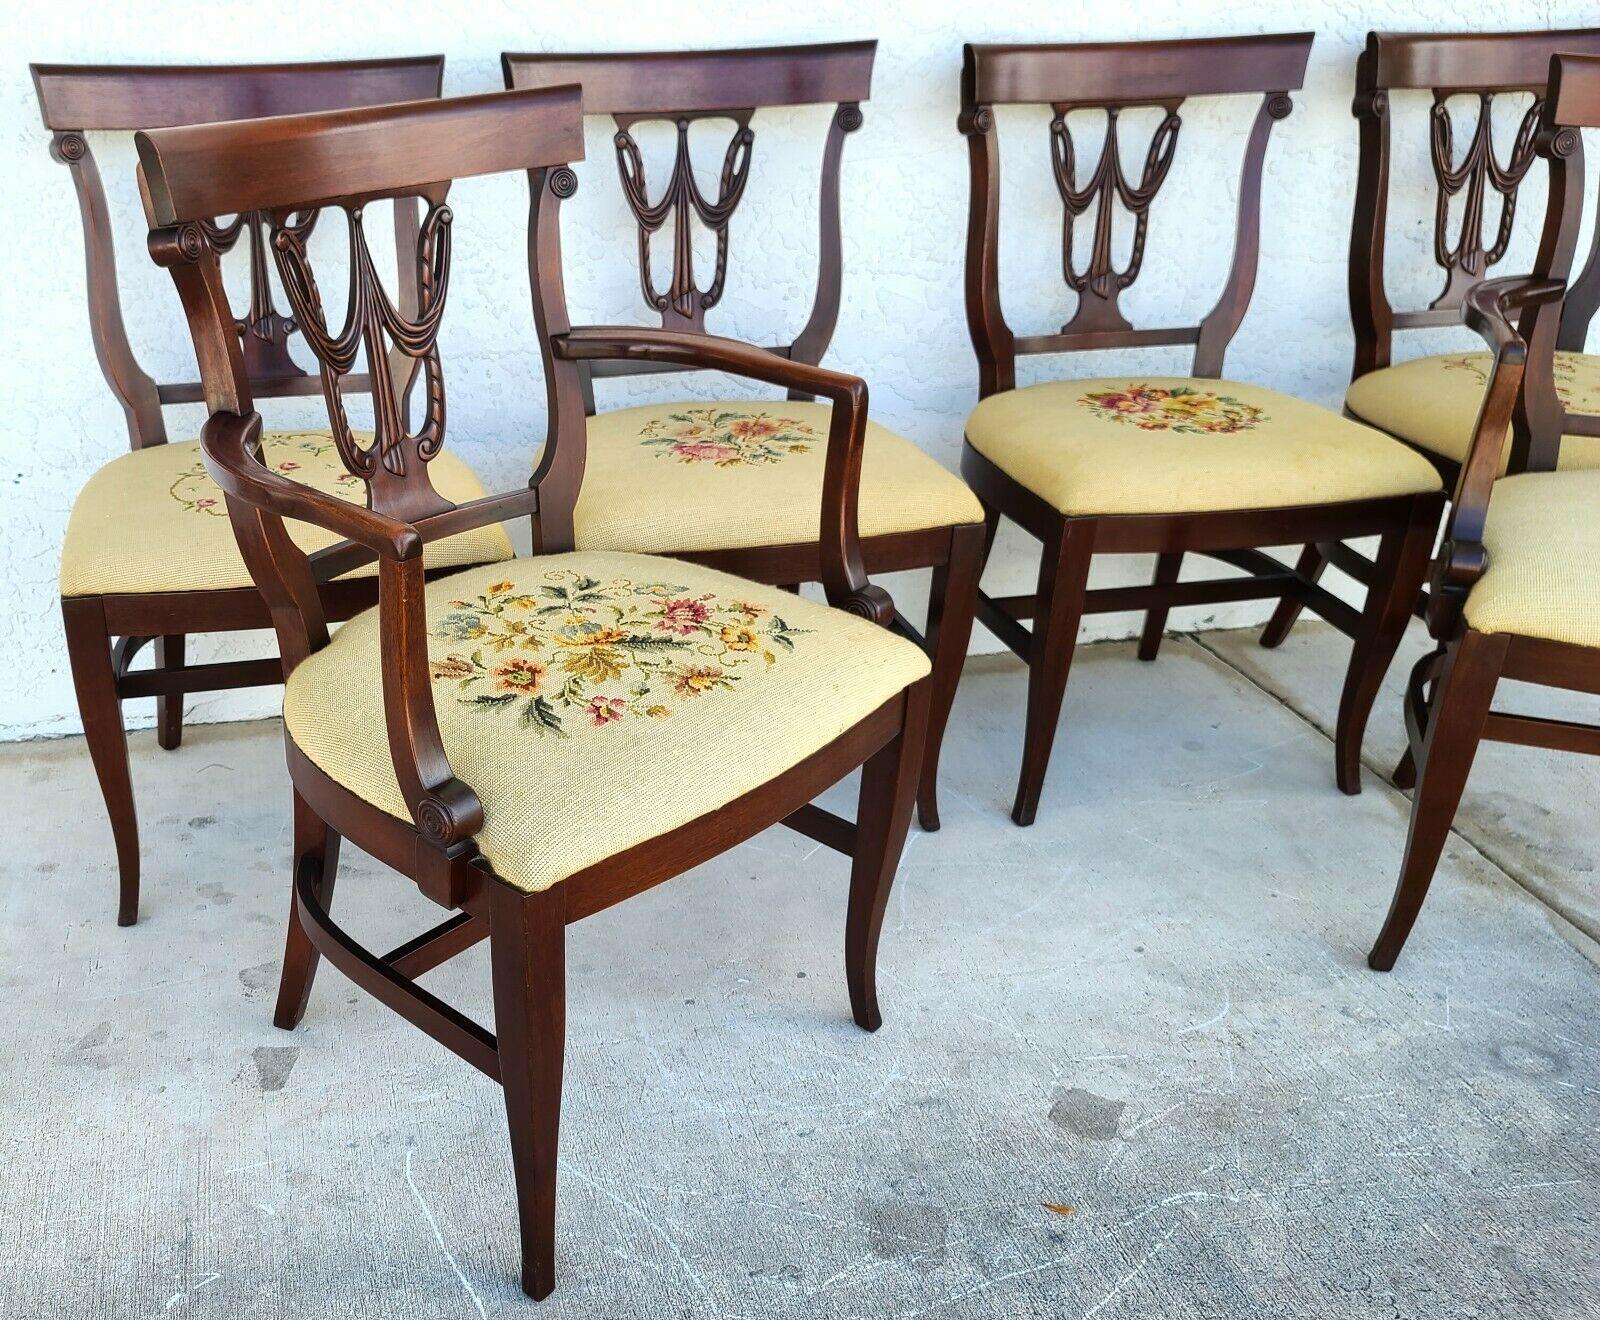 20th Century Antique 1920s Italian Regency Mahogany Dining Chairs with Needlepoint -Set of 6